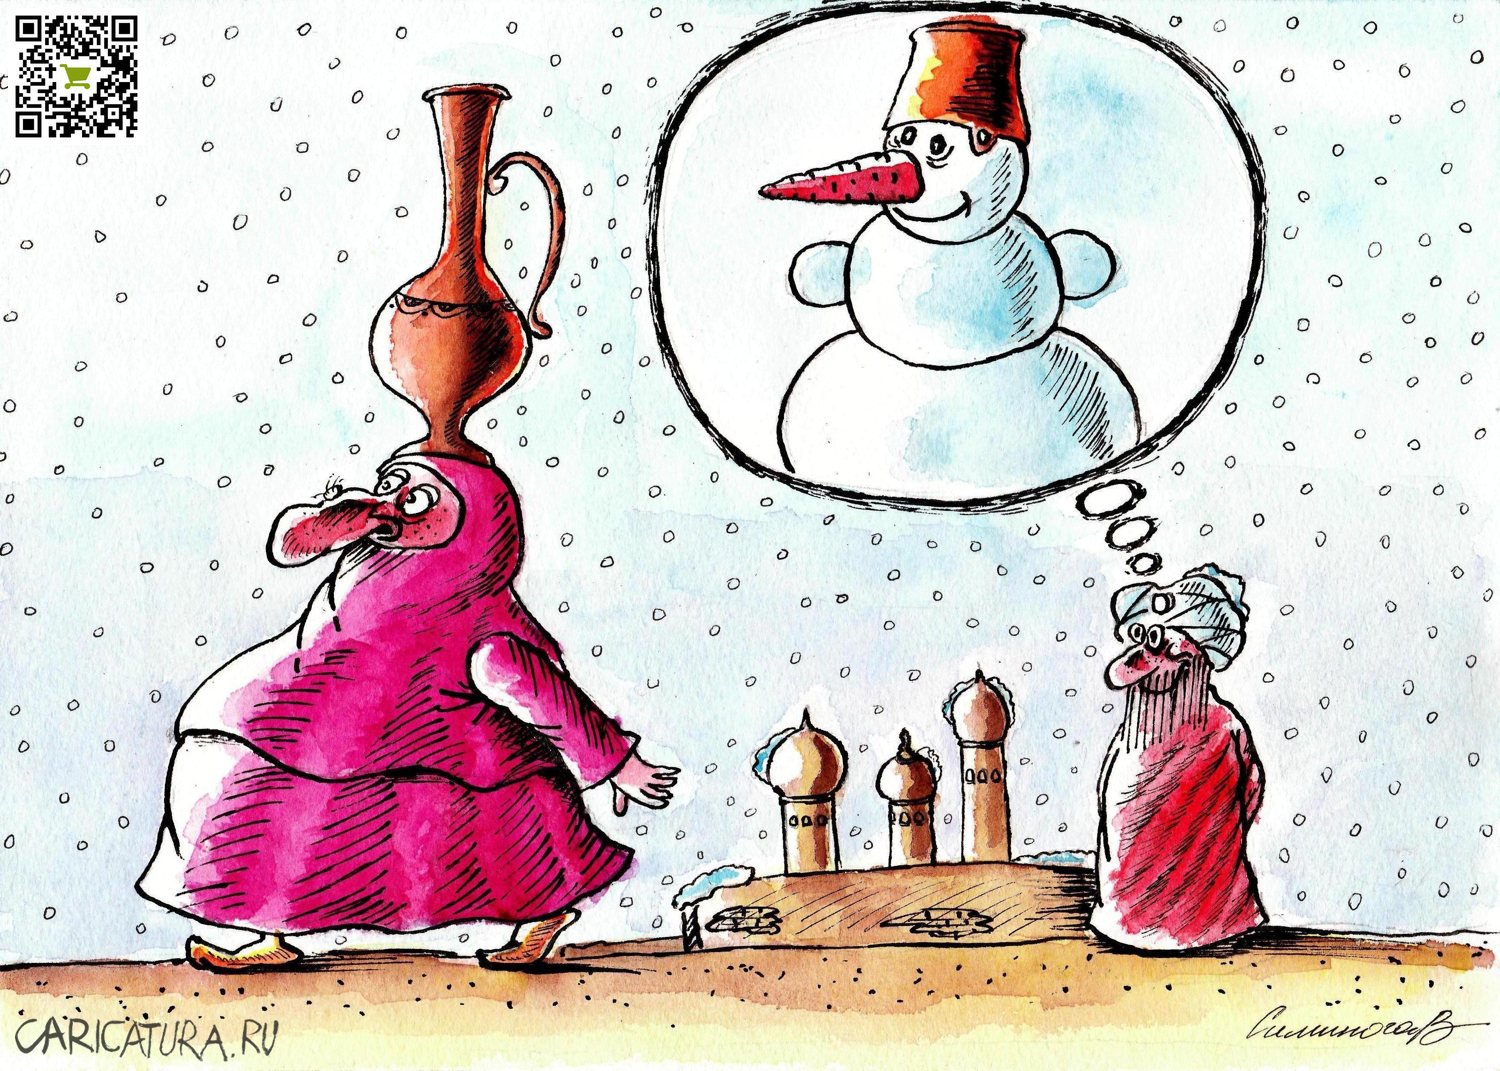 Карикатура "Ассоциации", Vadim Siminoga